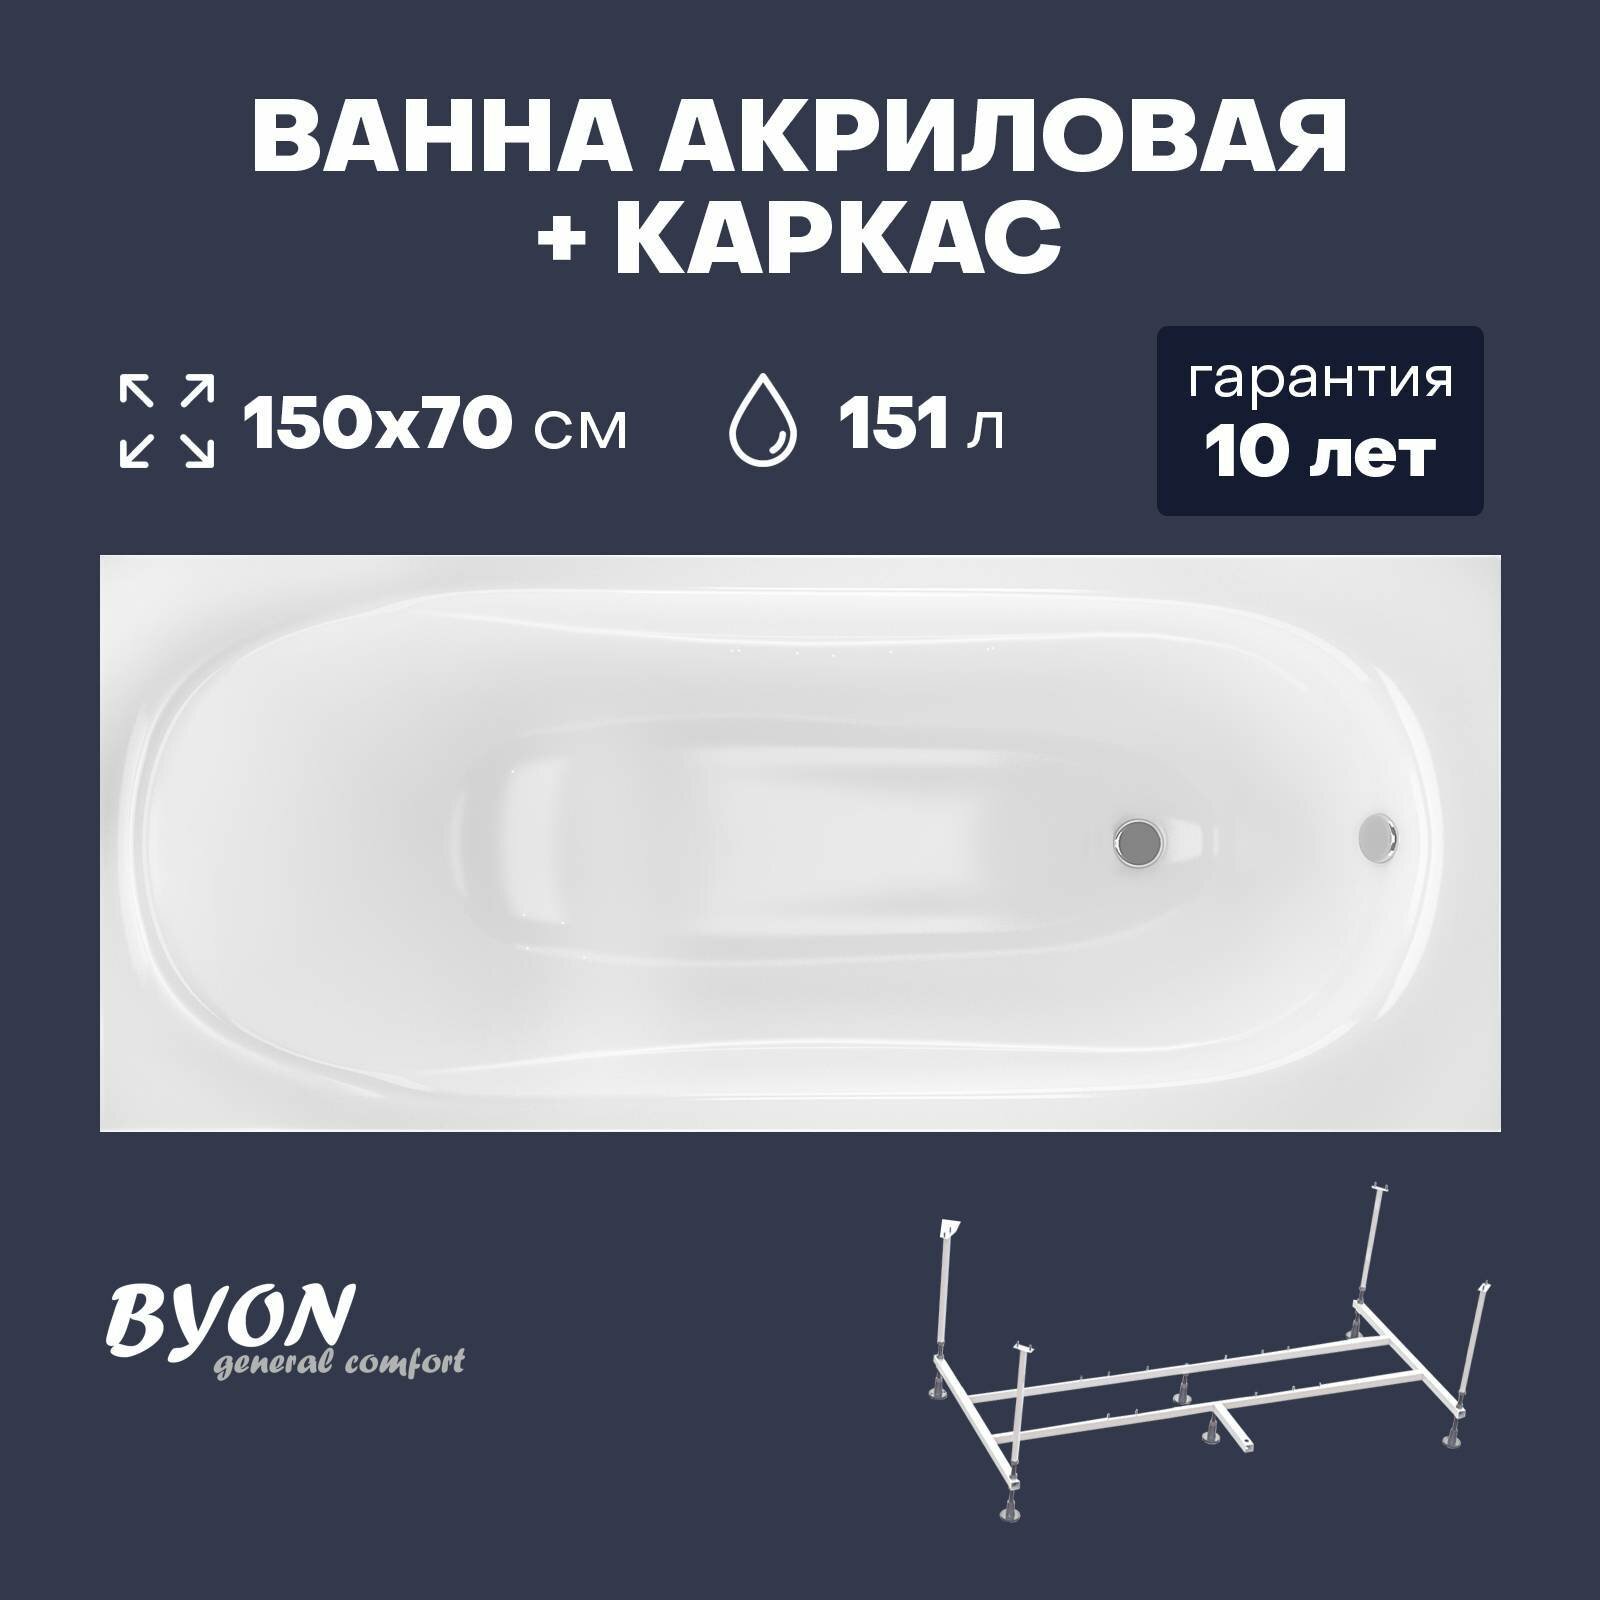 Ванна акриловая Byon Agesta 150х70х59 см в комплекте с каркасом